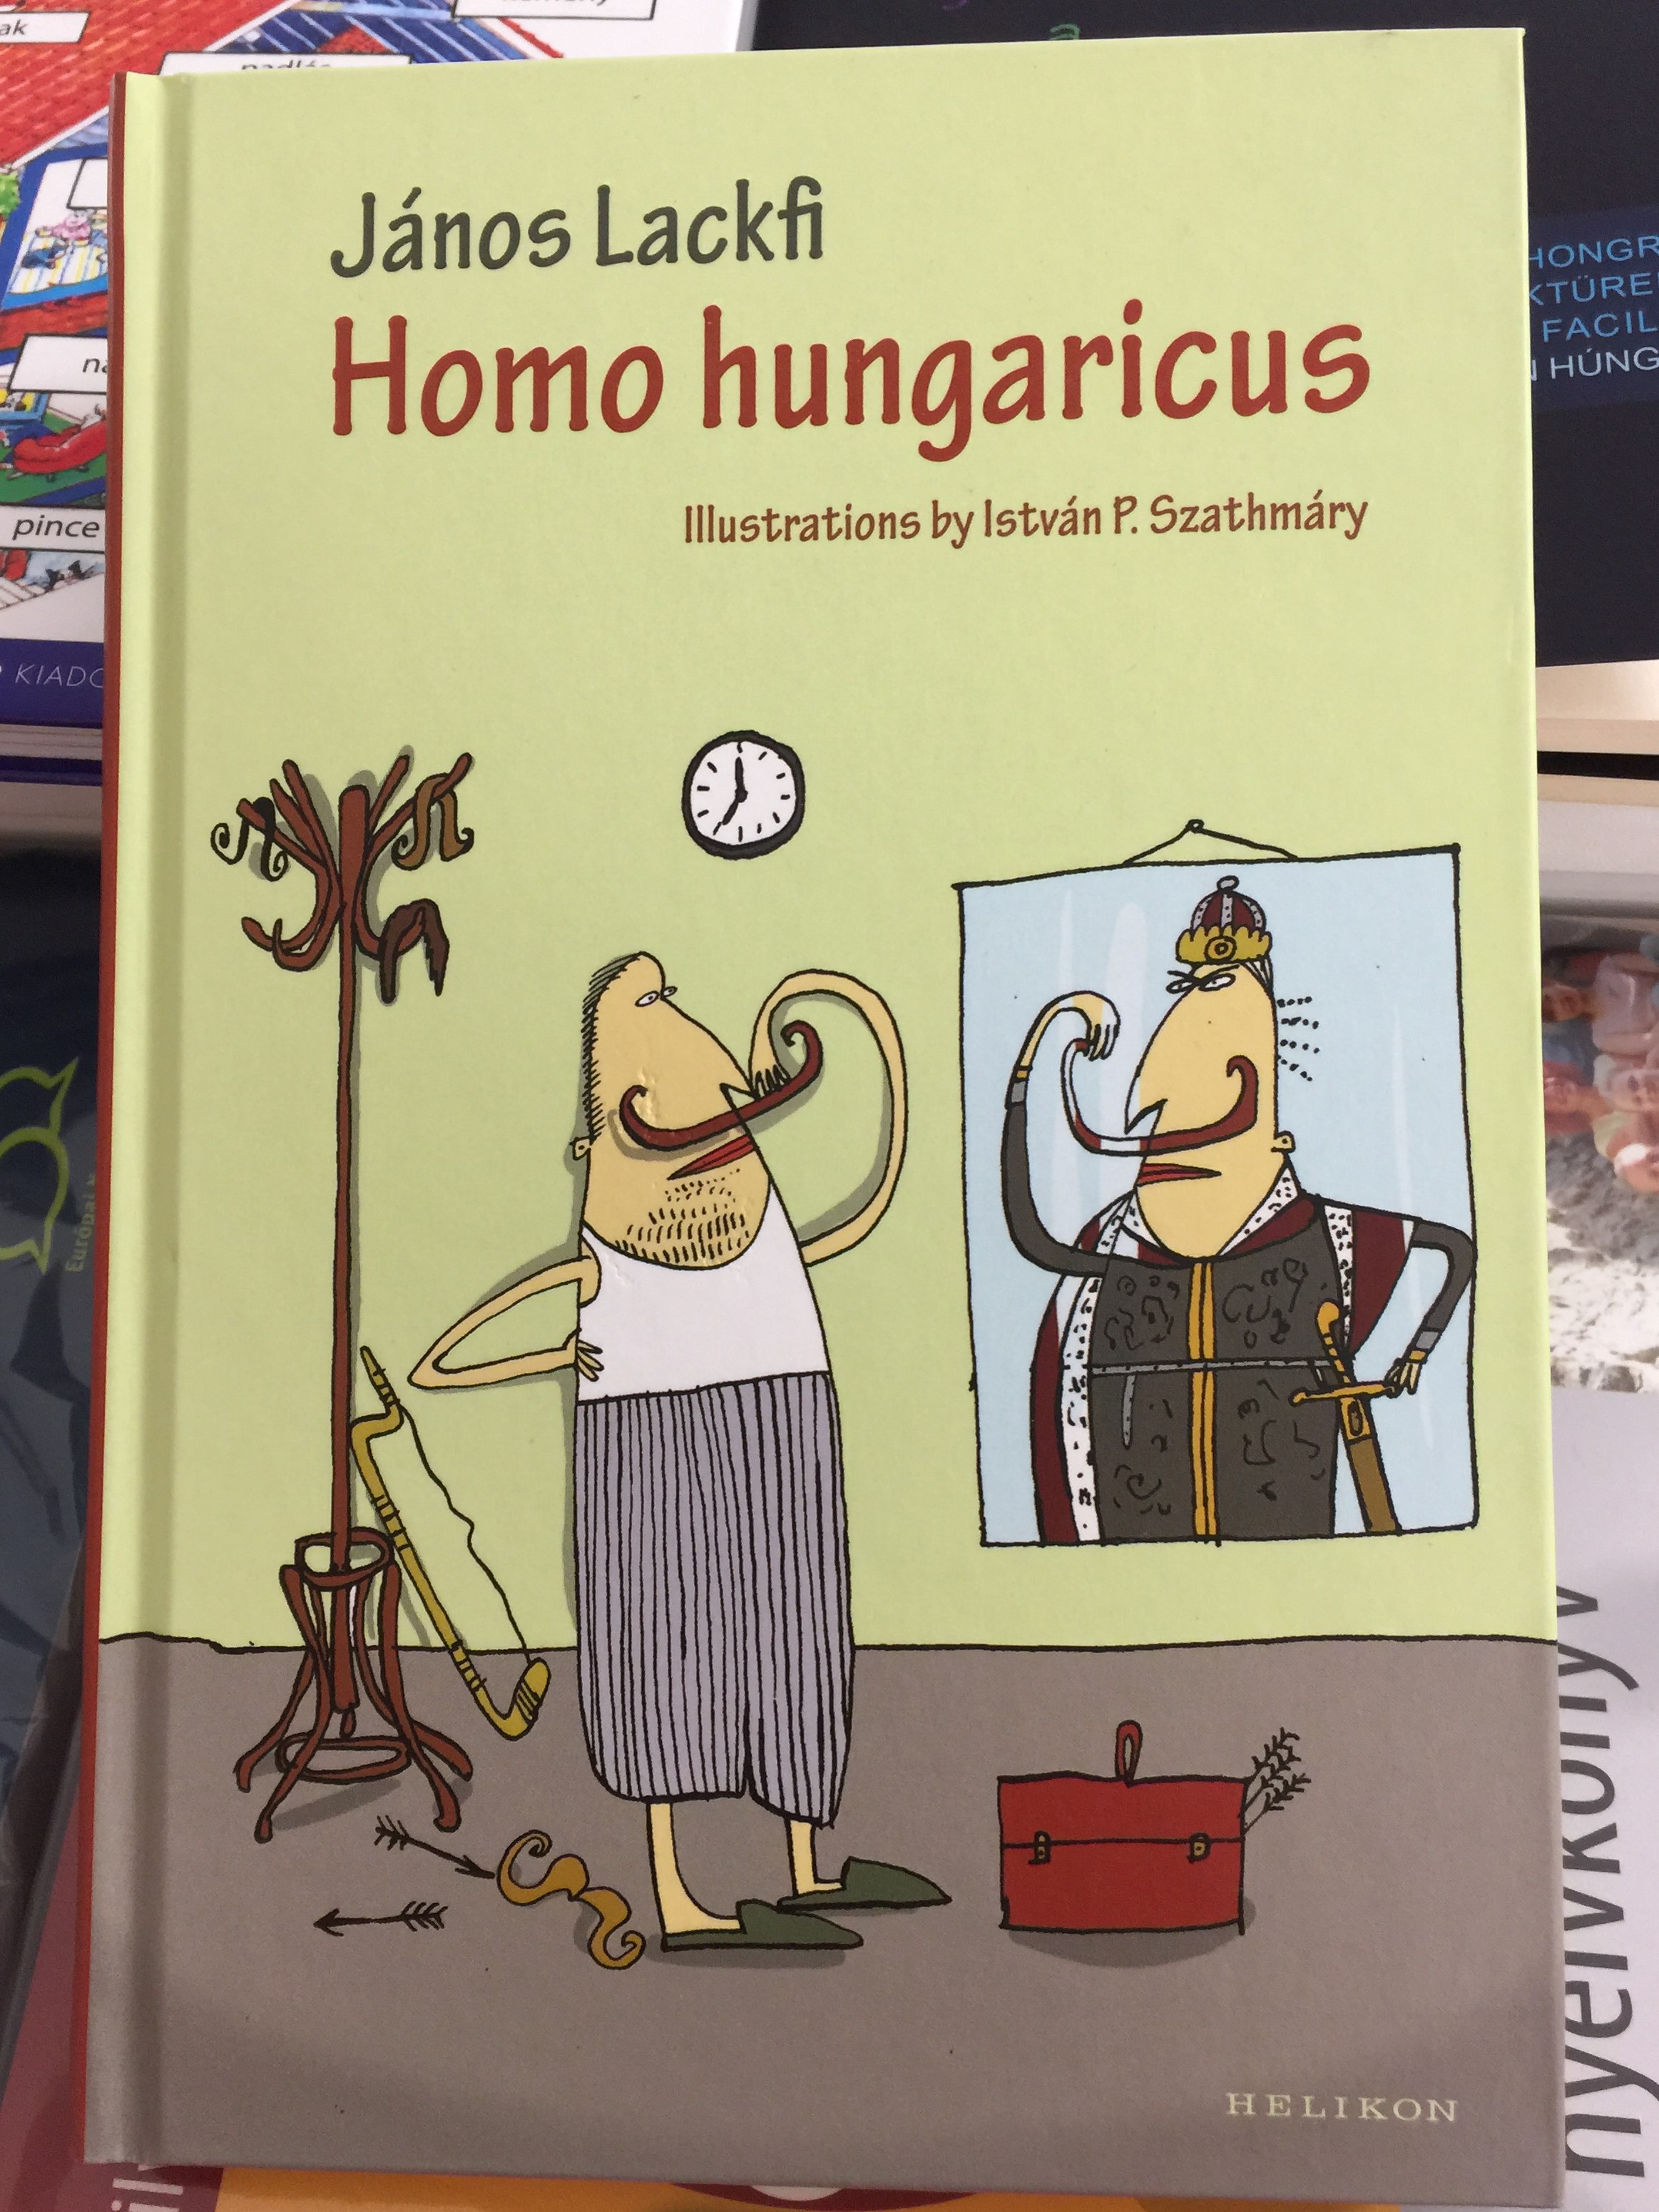 homo-hungaricus-by-j-nos-lackfi-magyar-man-1.jpg